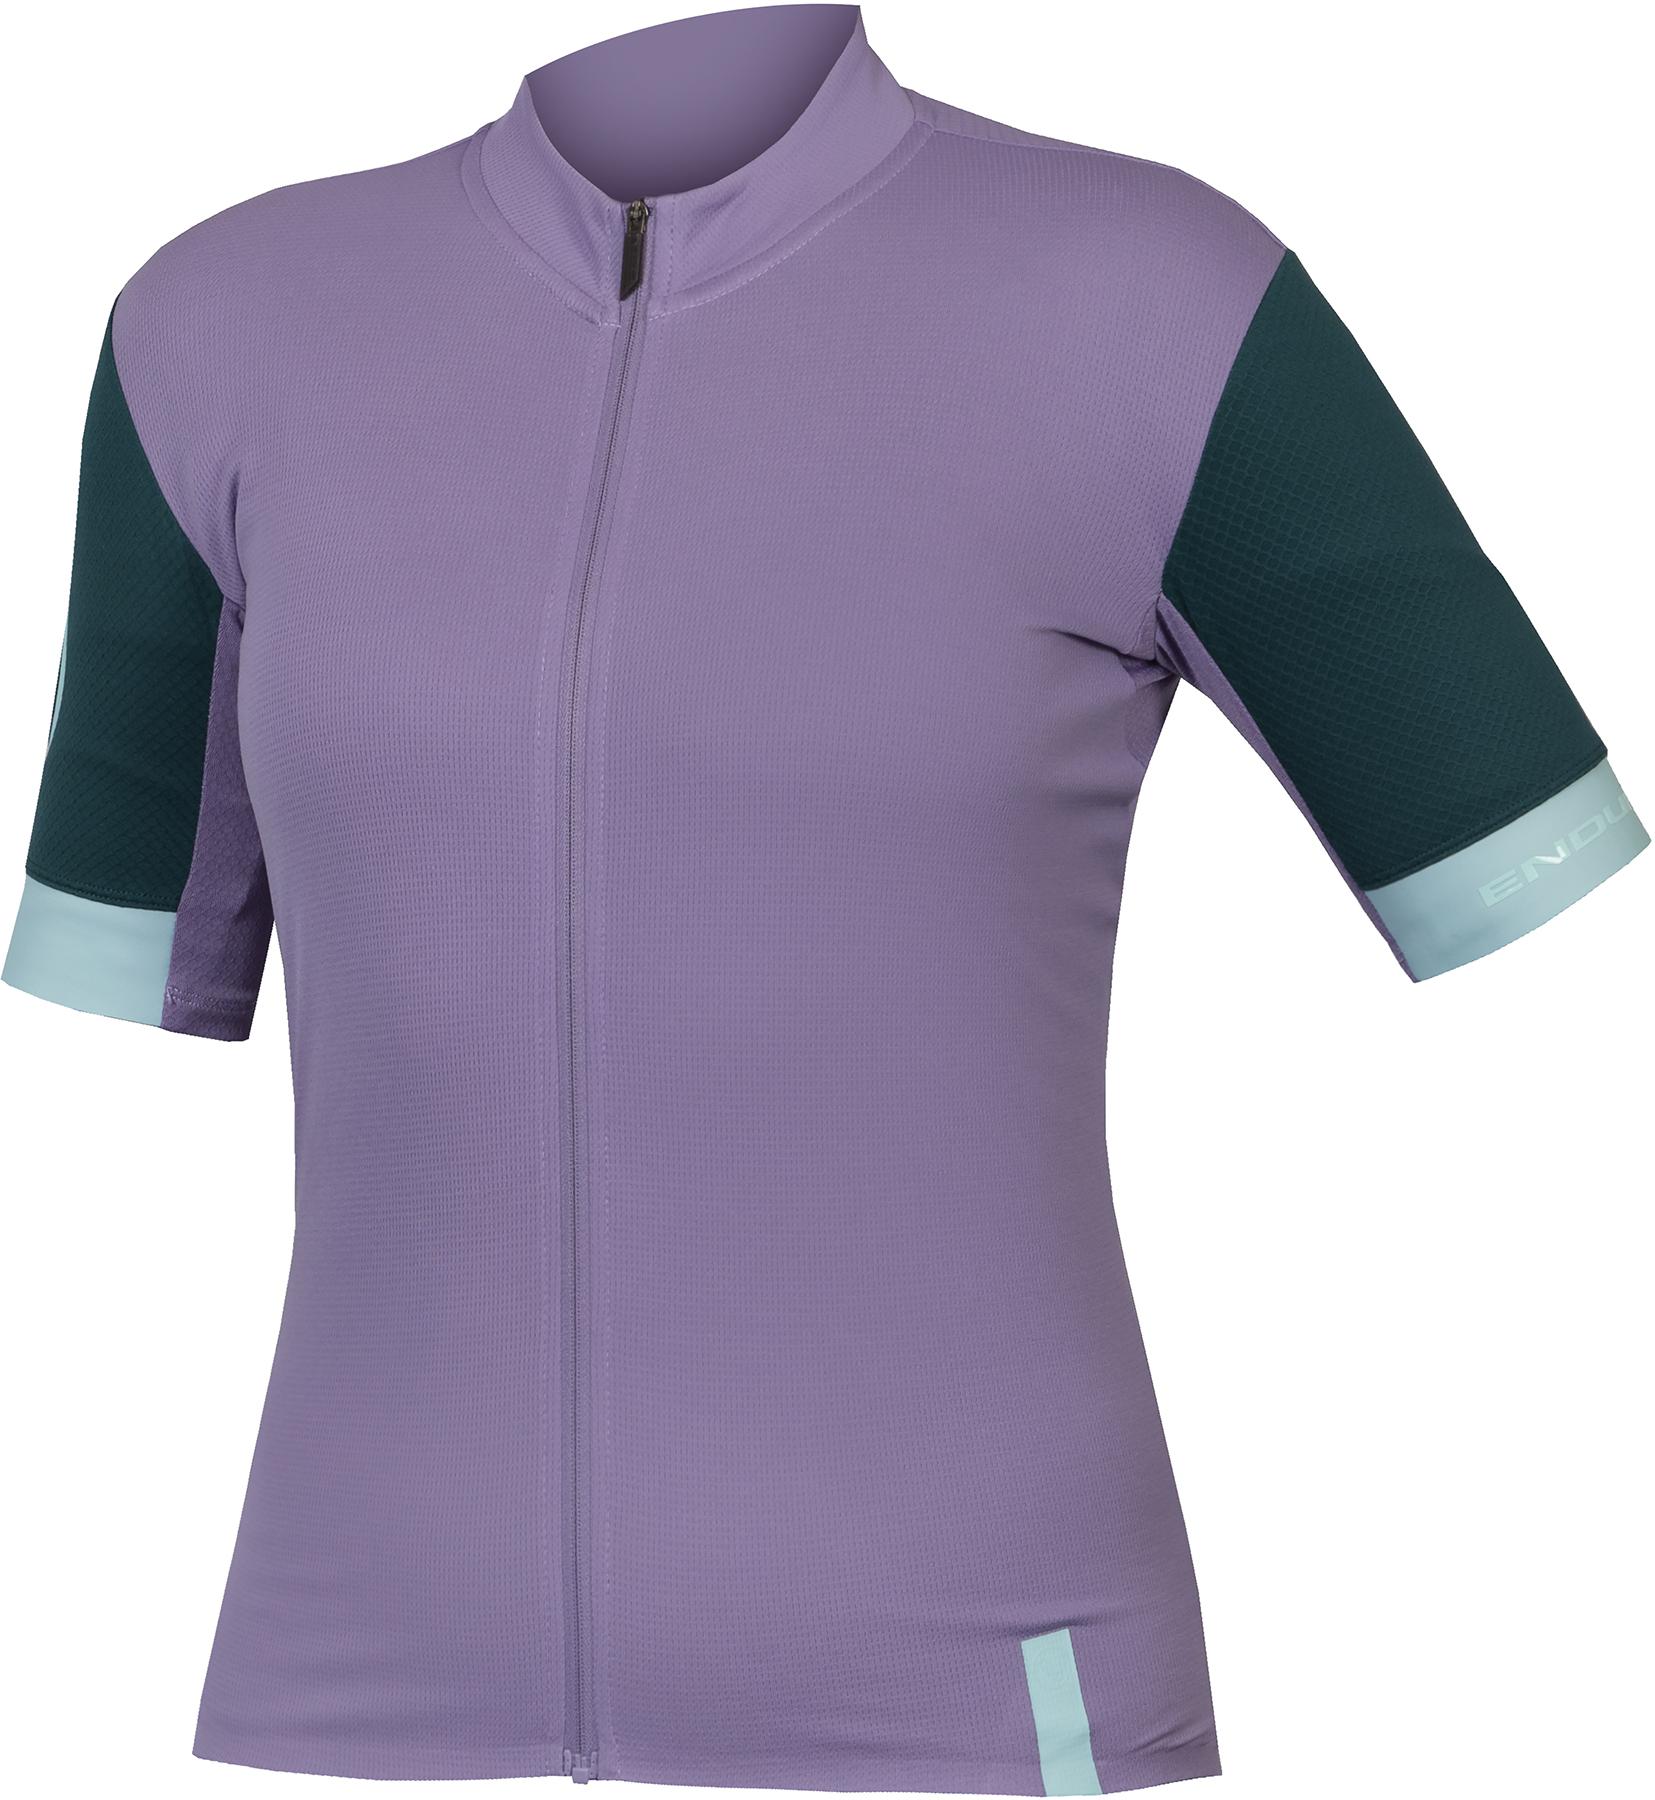 Endura Womens Fs260 Short Sleeve Cycling Jersey - Violet